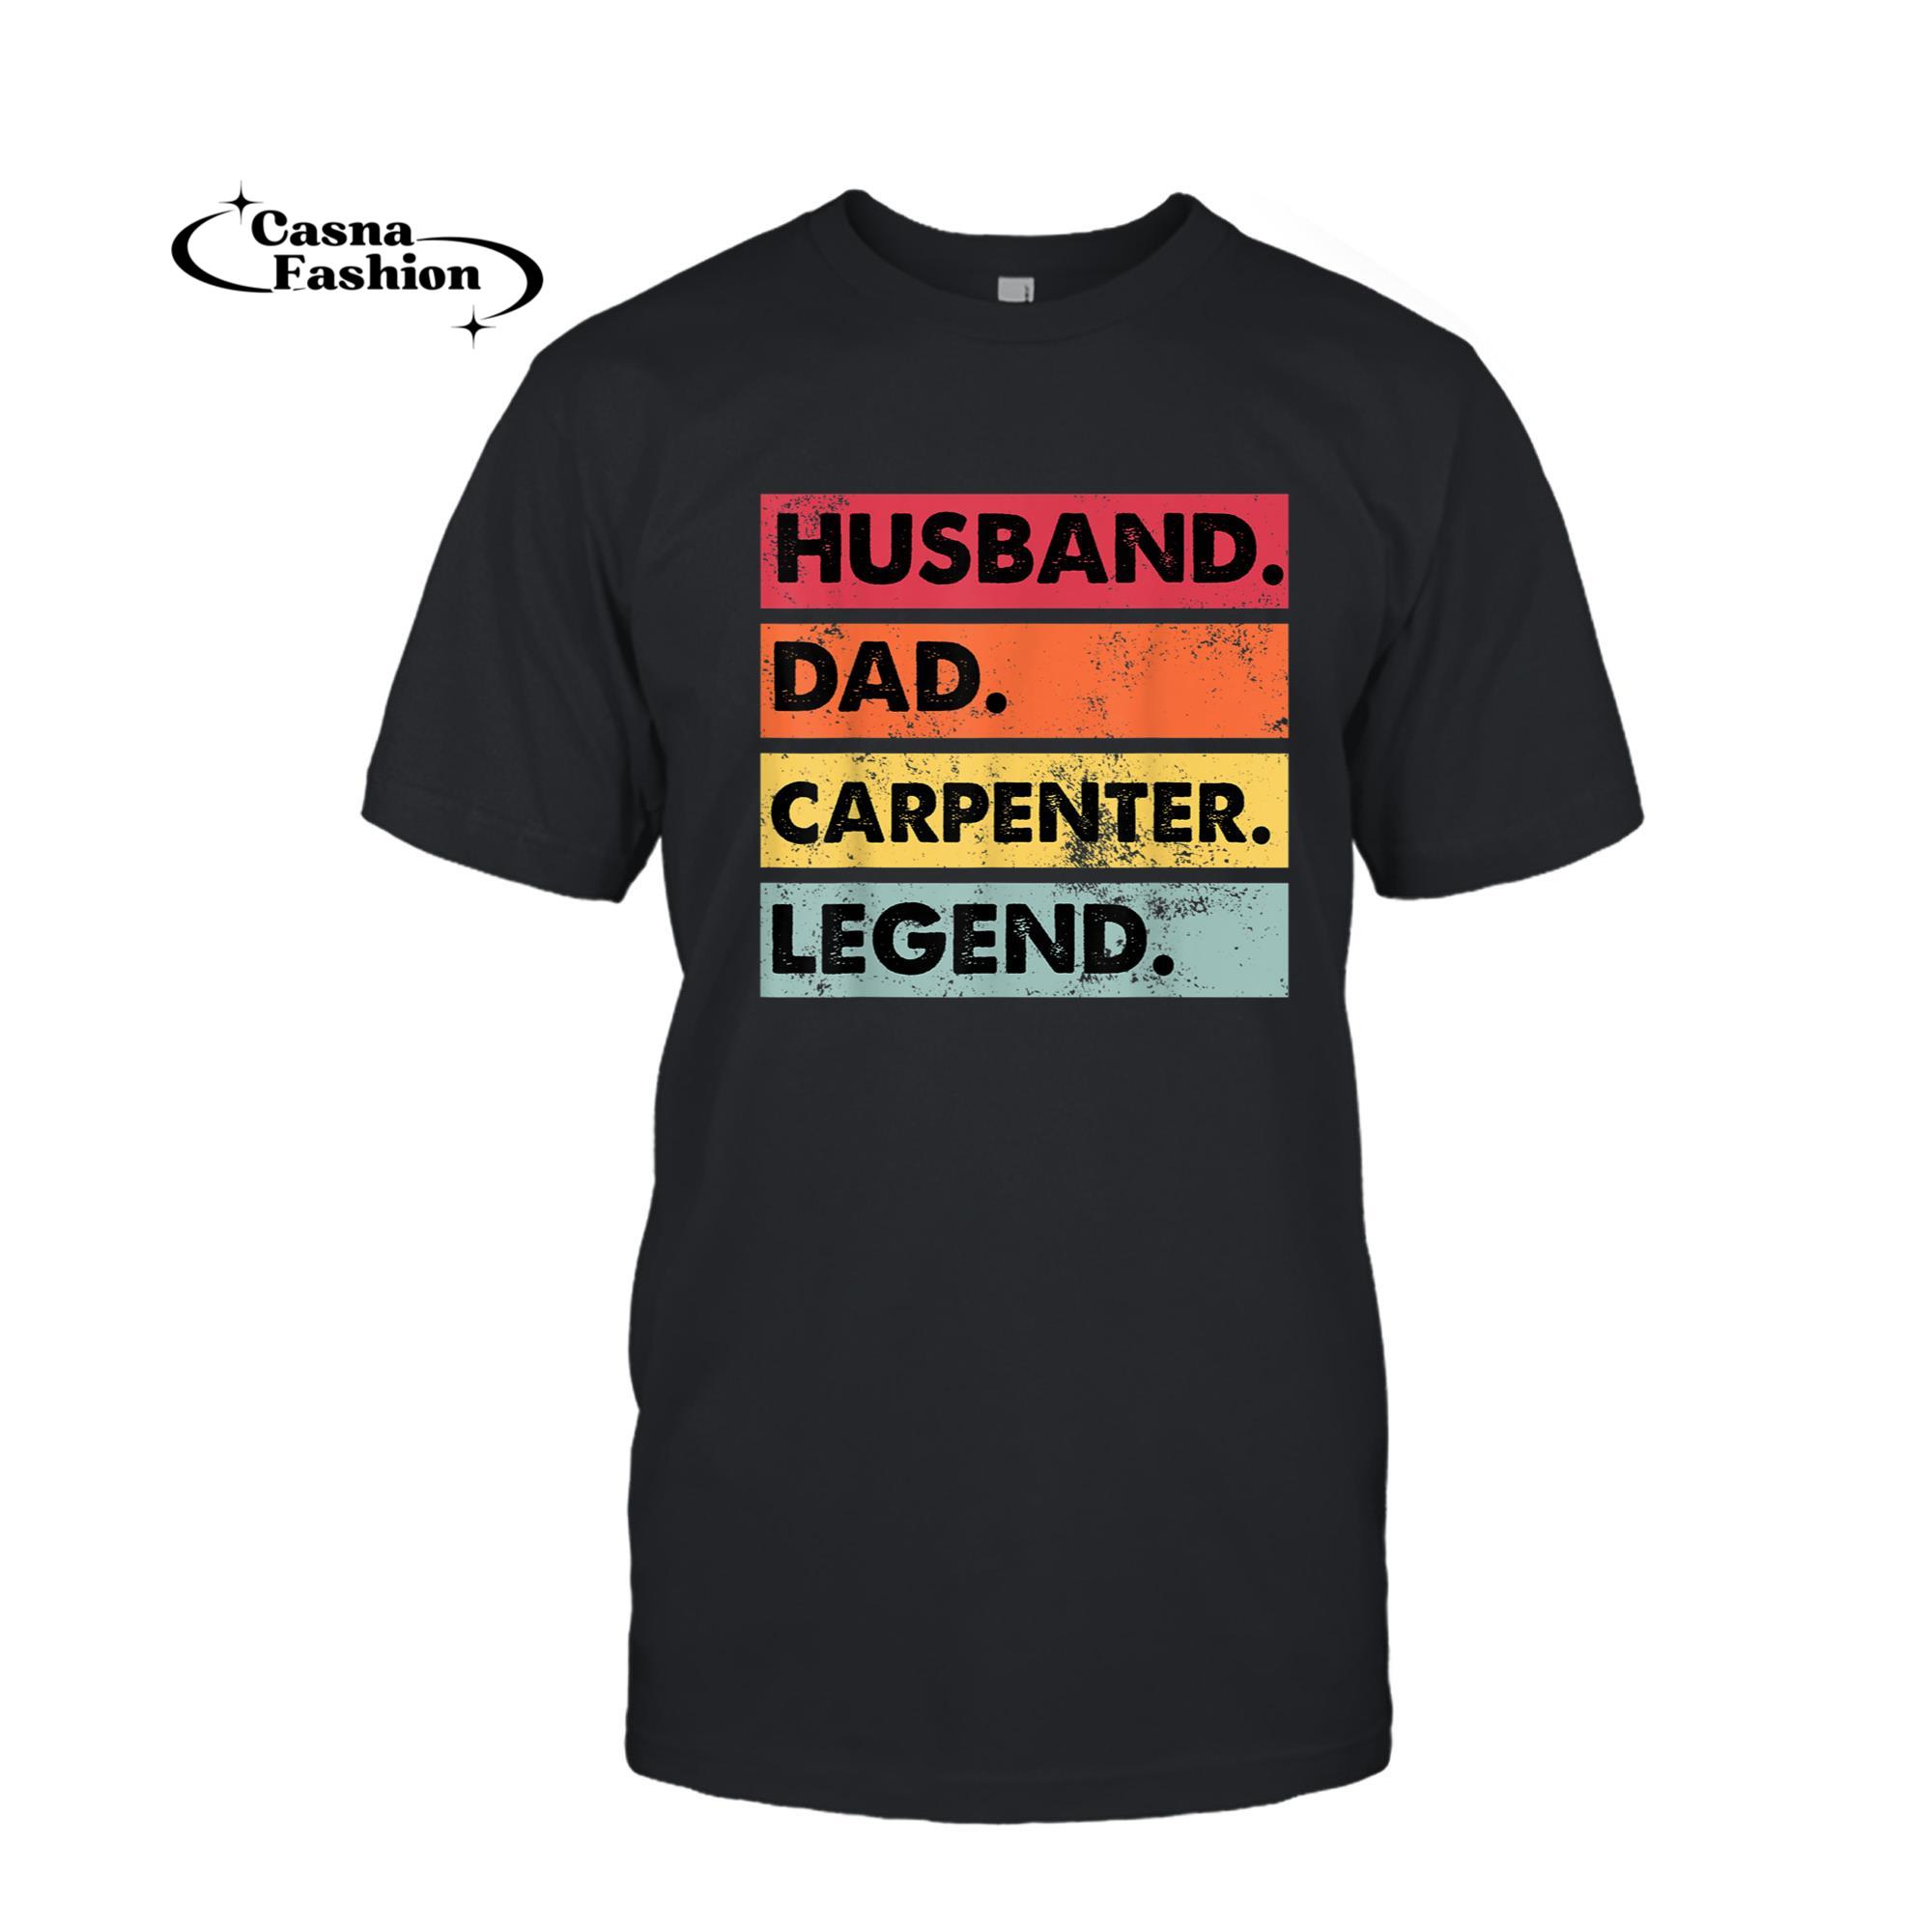 casnafashion_T-shirt_Husband Dad Carpenter Legend Funny Woodworking Woodworker T-Shirt_T-shirt_Black